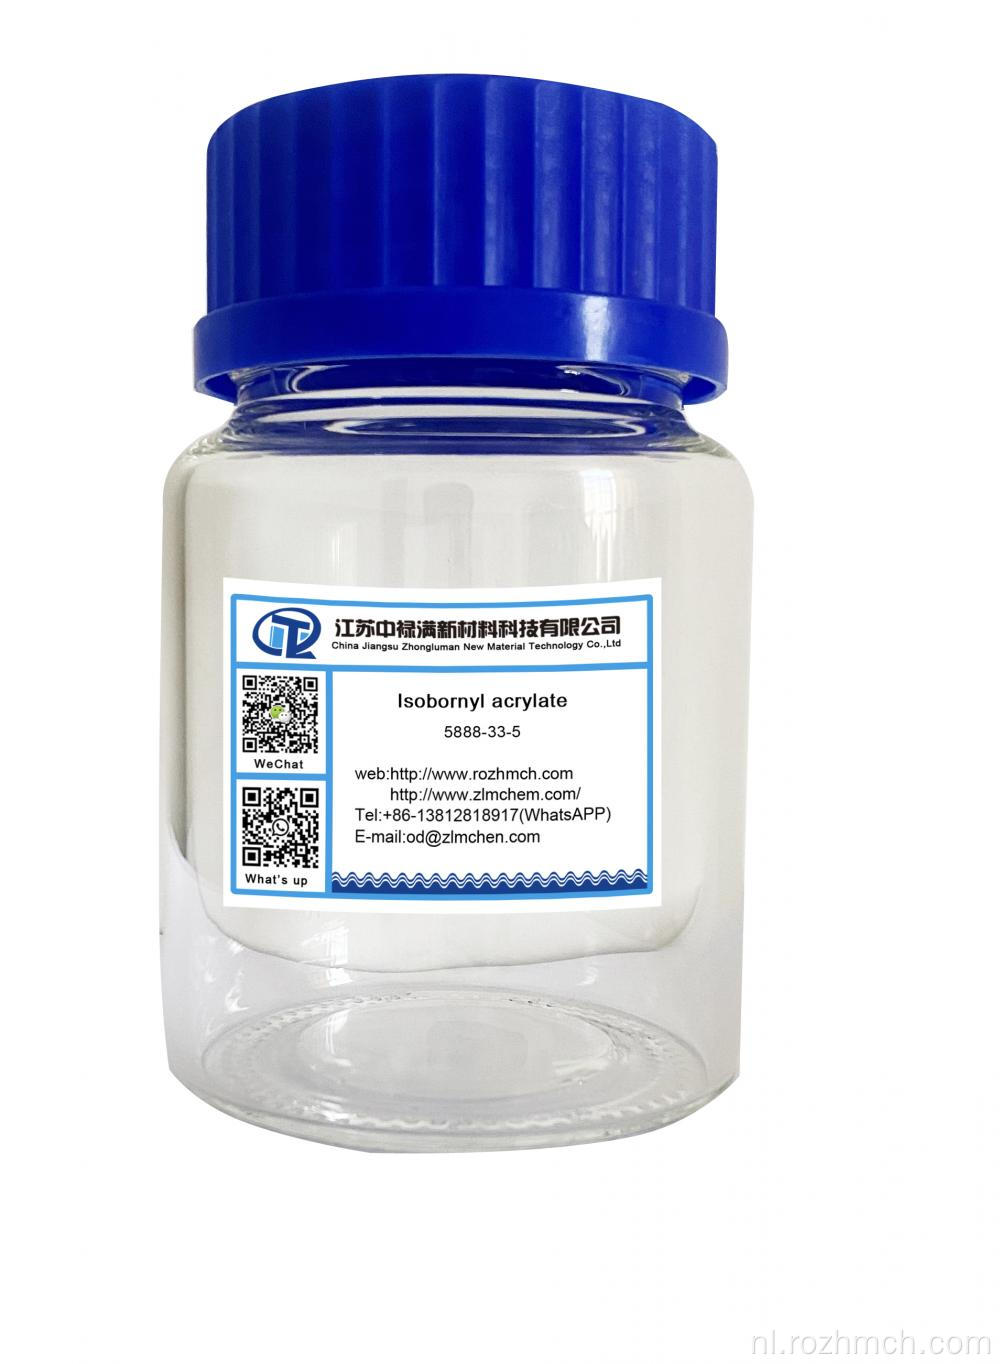 Isobornylacrylaat CAS nr. 5888-33-5